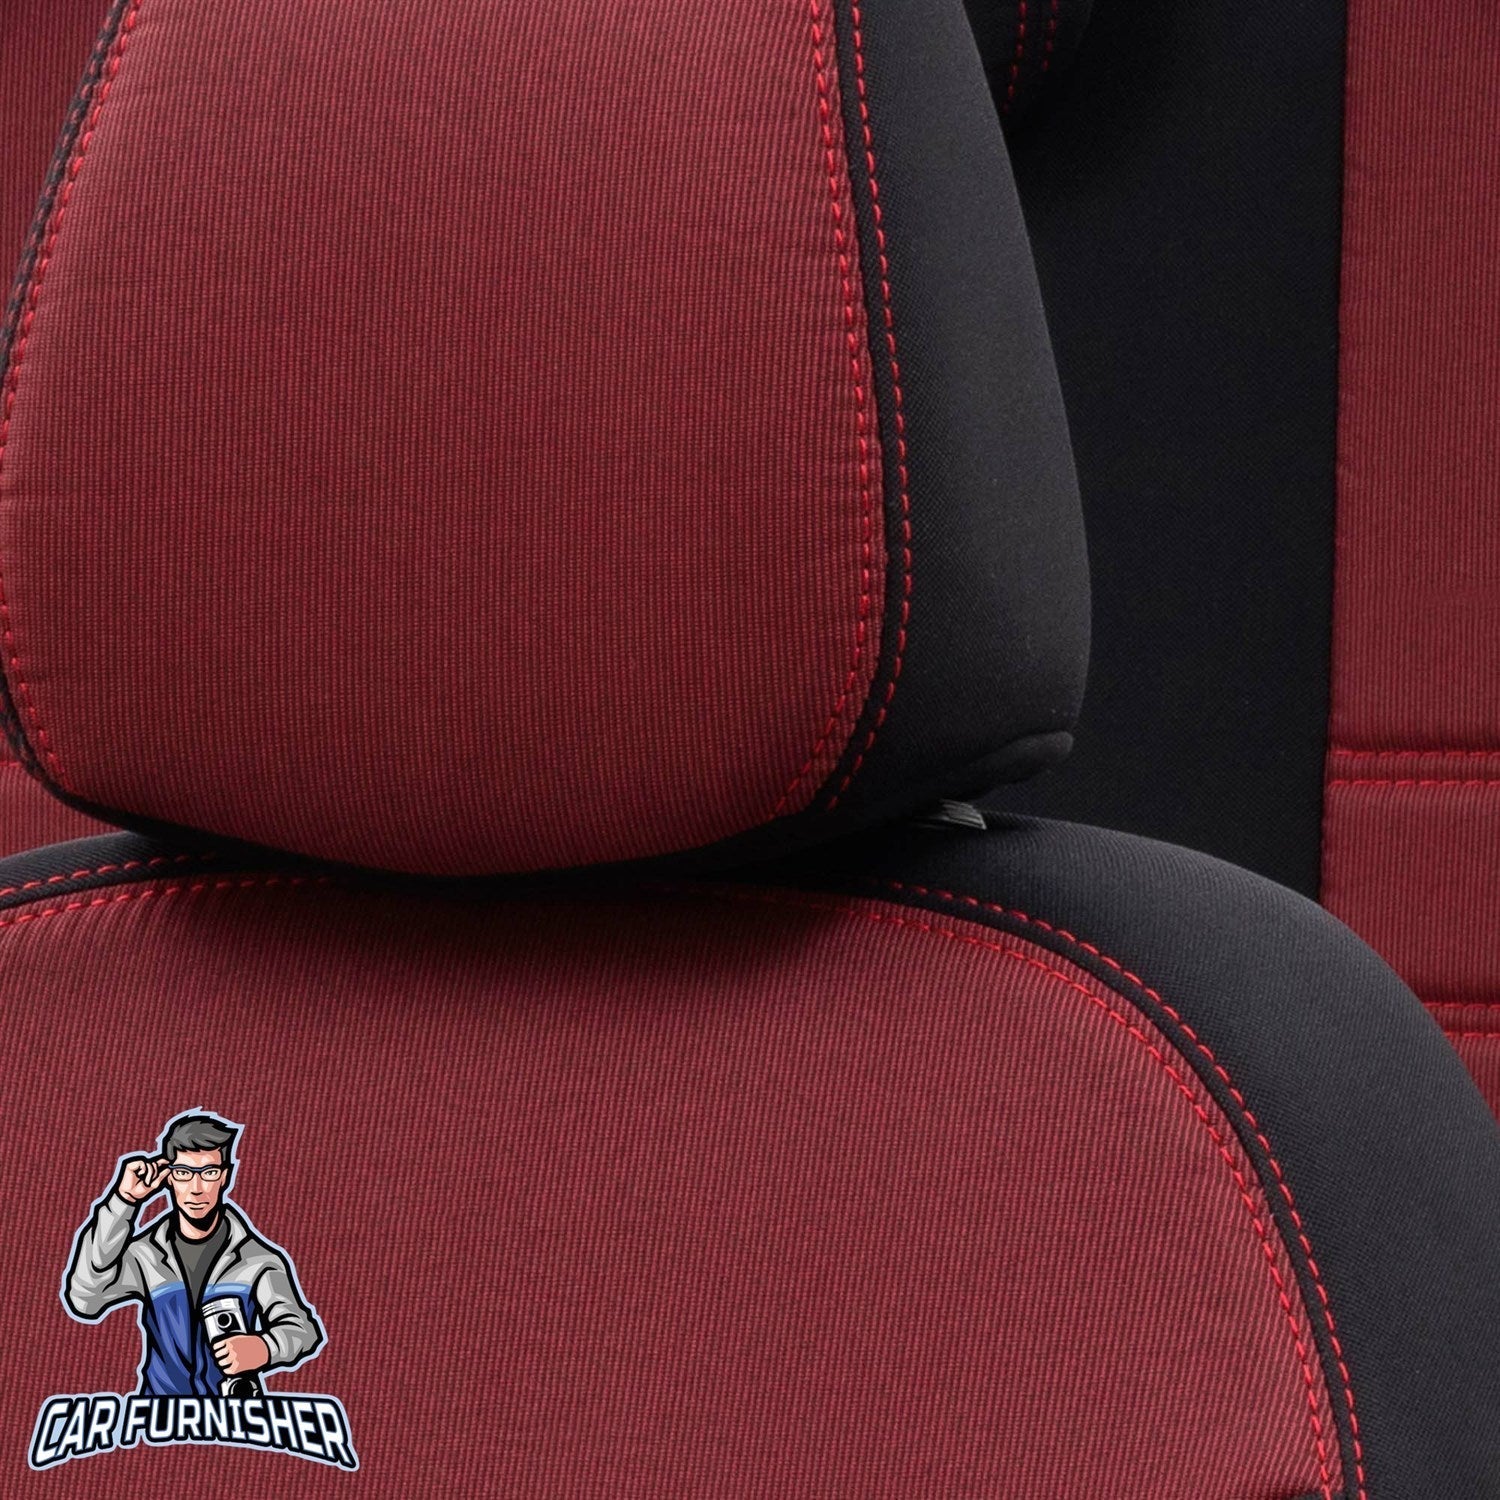 Peugeot 206 Seat Covers Original Jacquard Design Red Jacquard Fabric